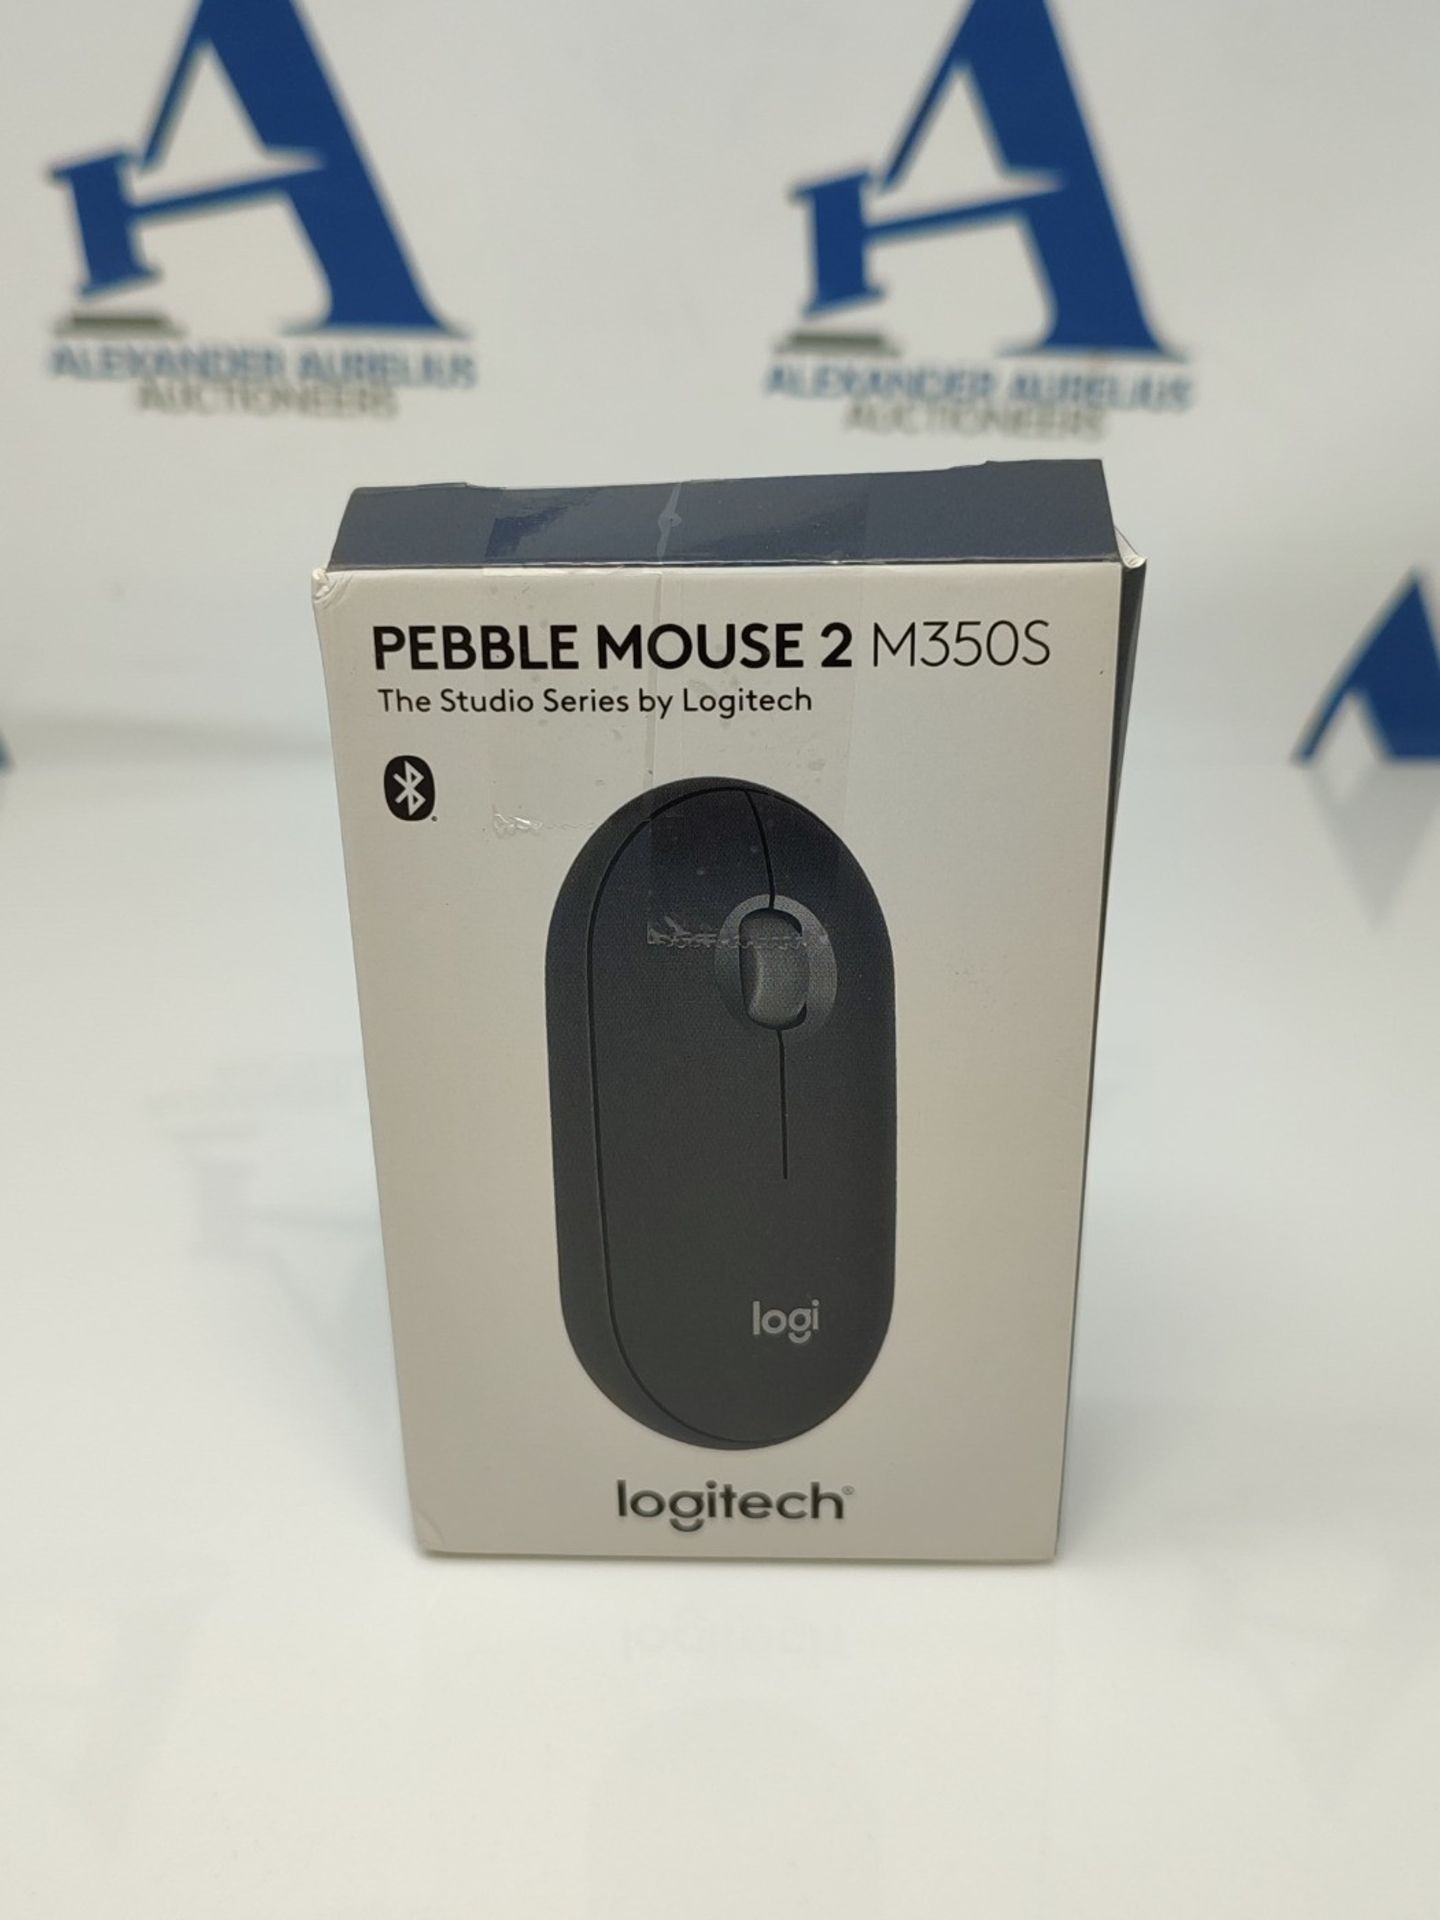 Logitech Pebble Mouse 2 M350s is a wireless Bluetooth mouse that is slim, portable, li